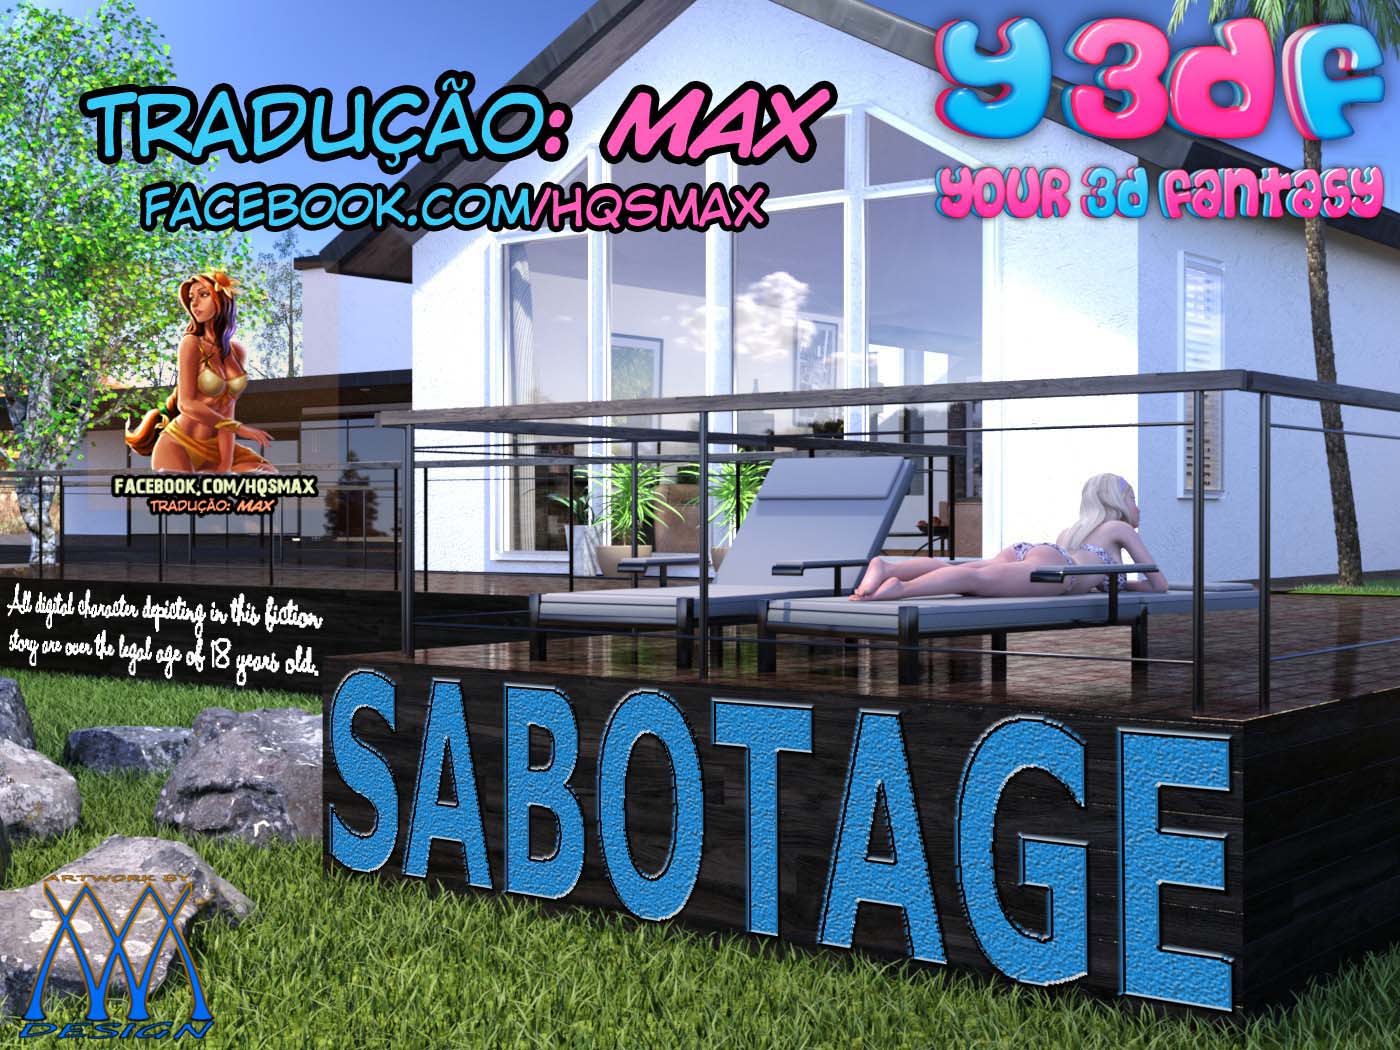 Sabotage (1)